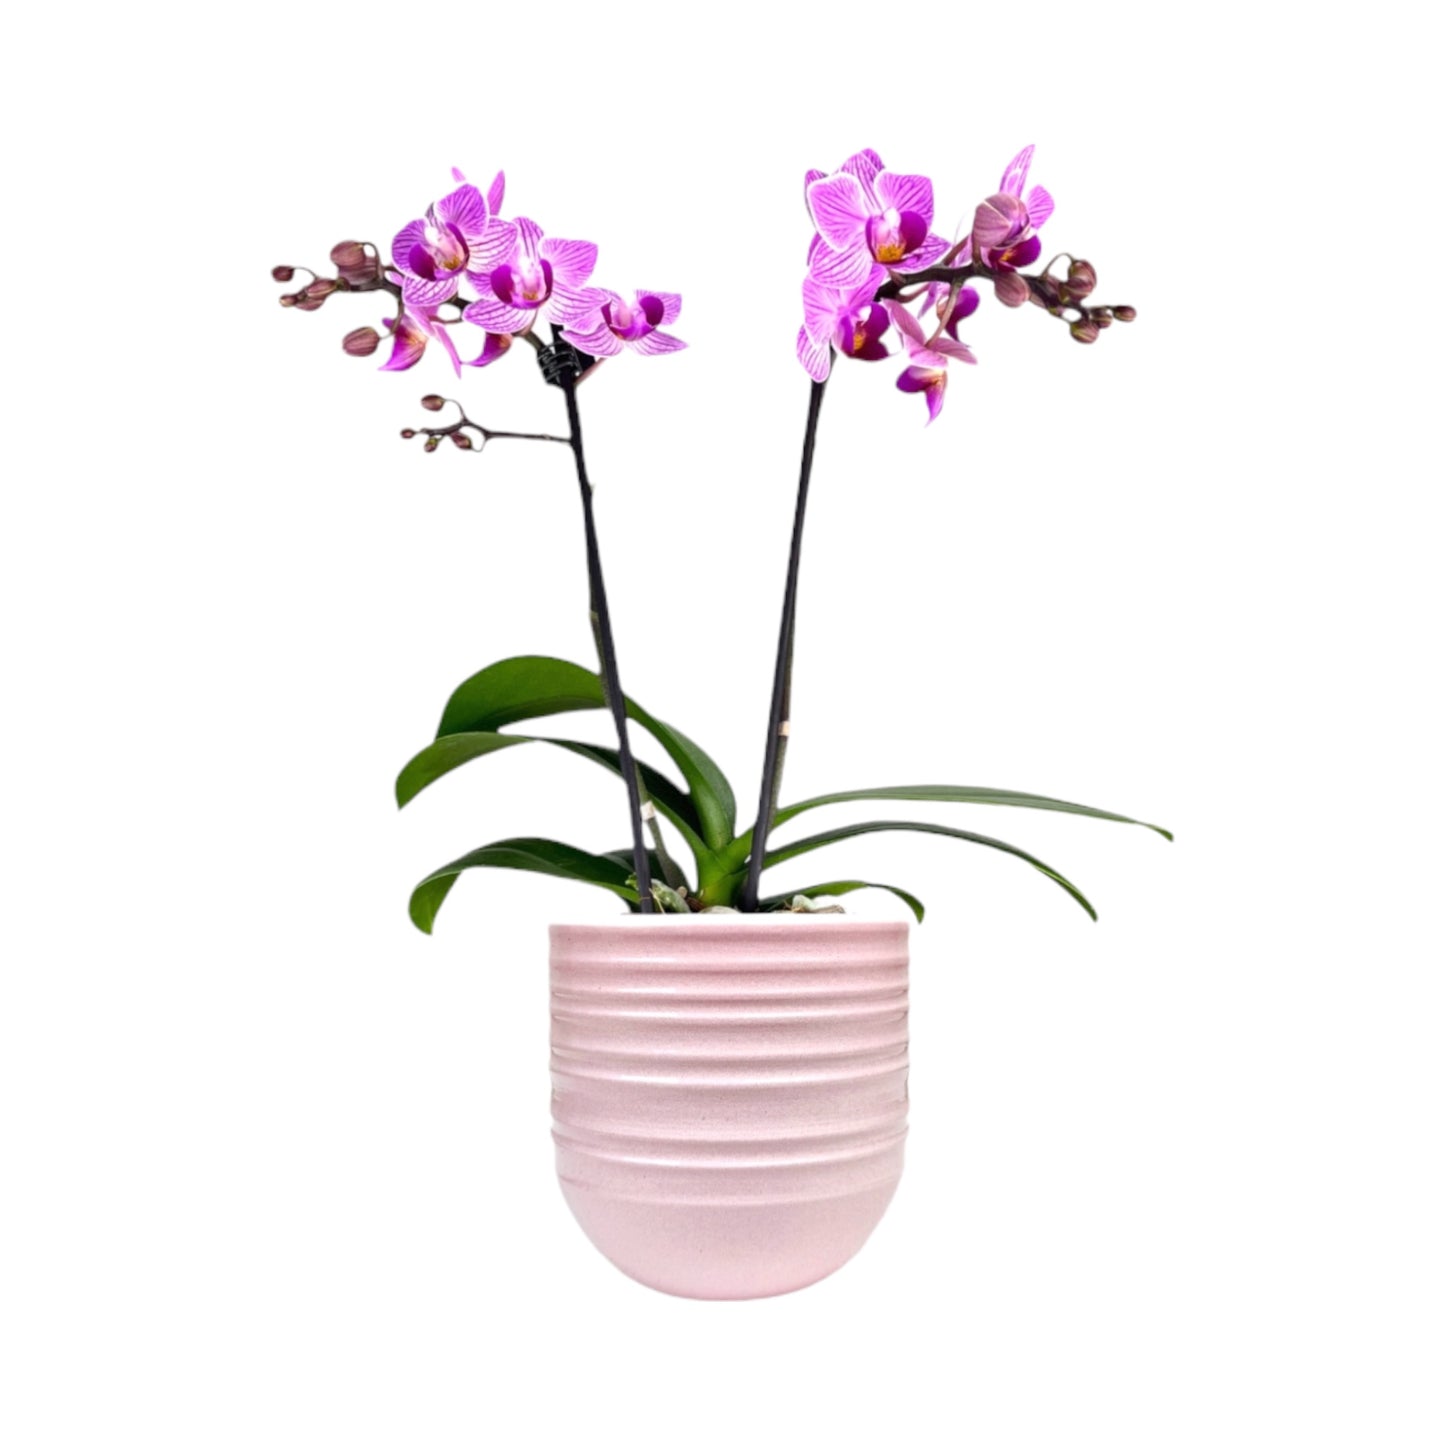 Phalaenopsis 9cm Twin Stem Pink in Hampshire Ceramic